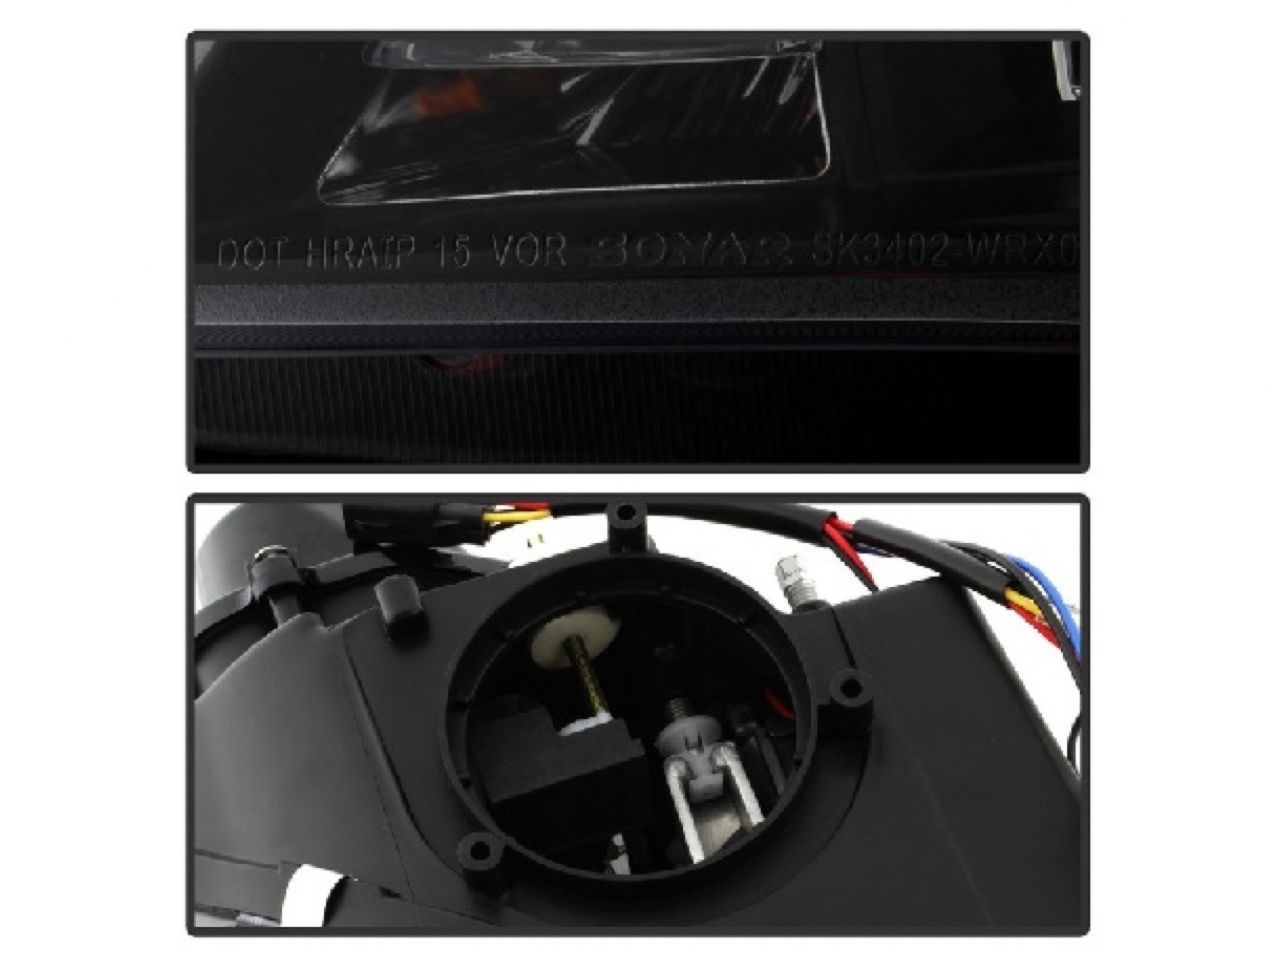 Spyder Subaru impreza WRX 2006-2007 Projector Headlights - Xenon/HID Model On